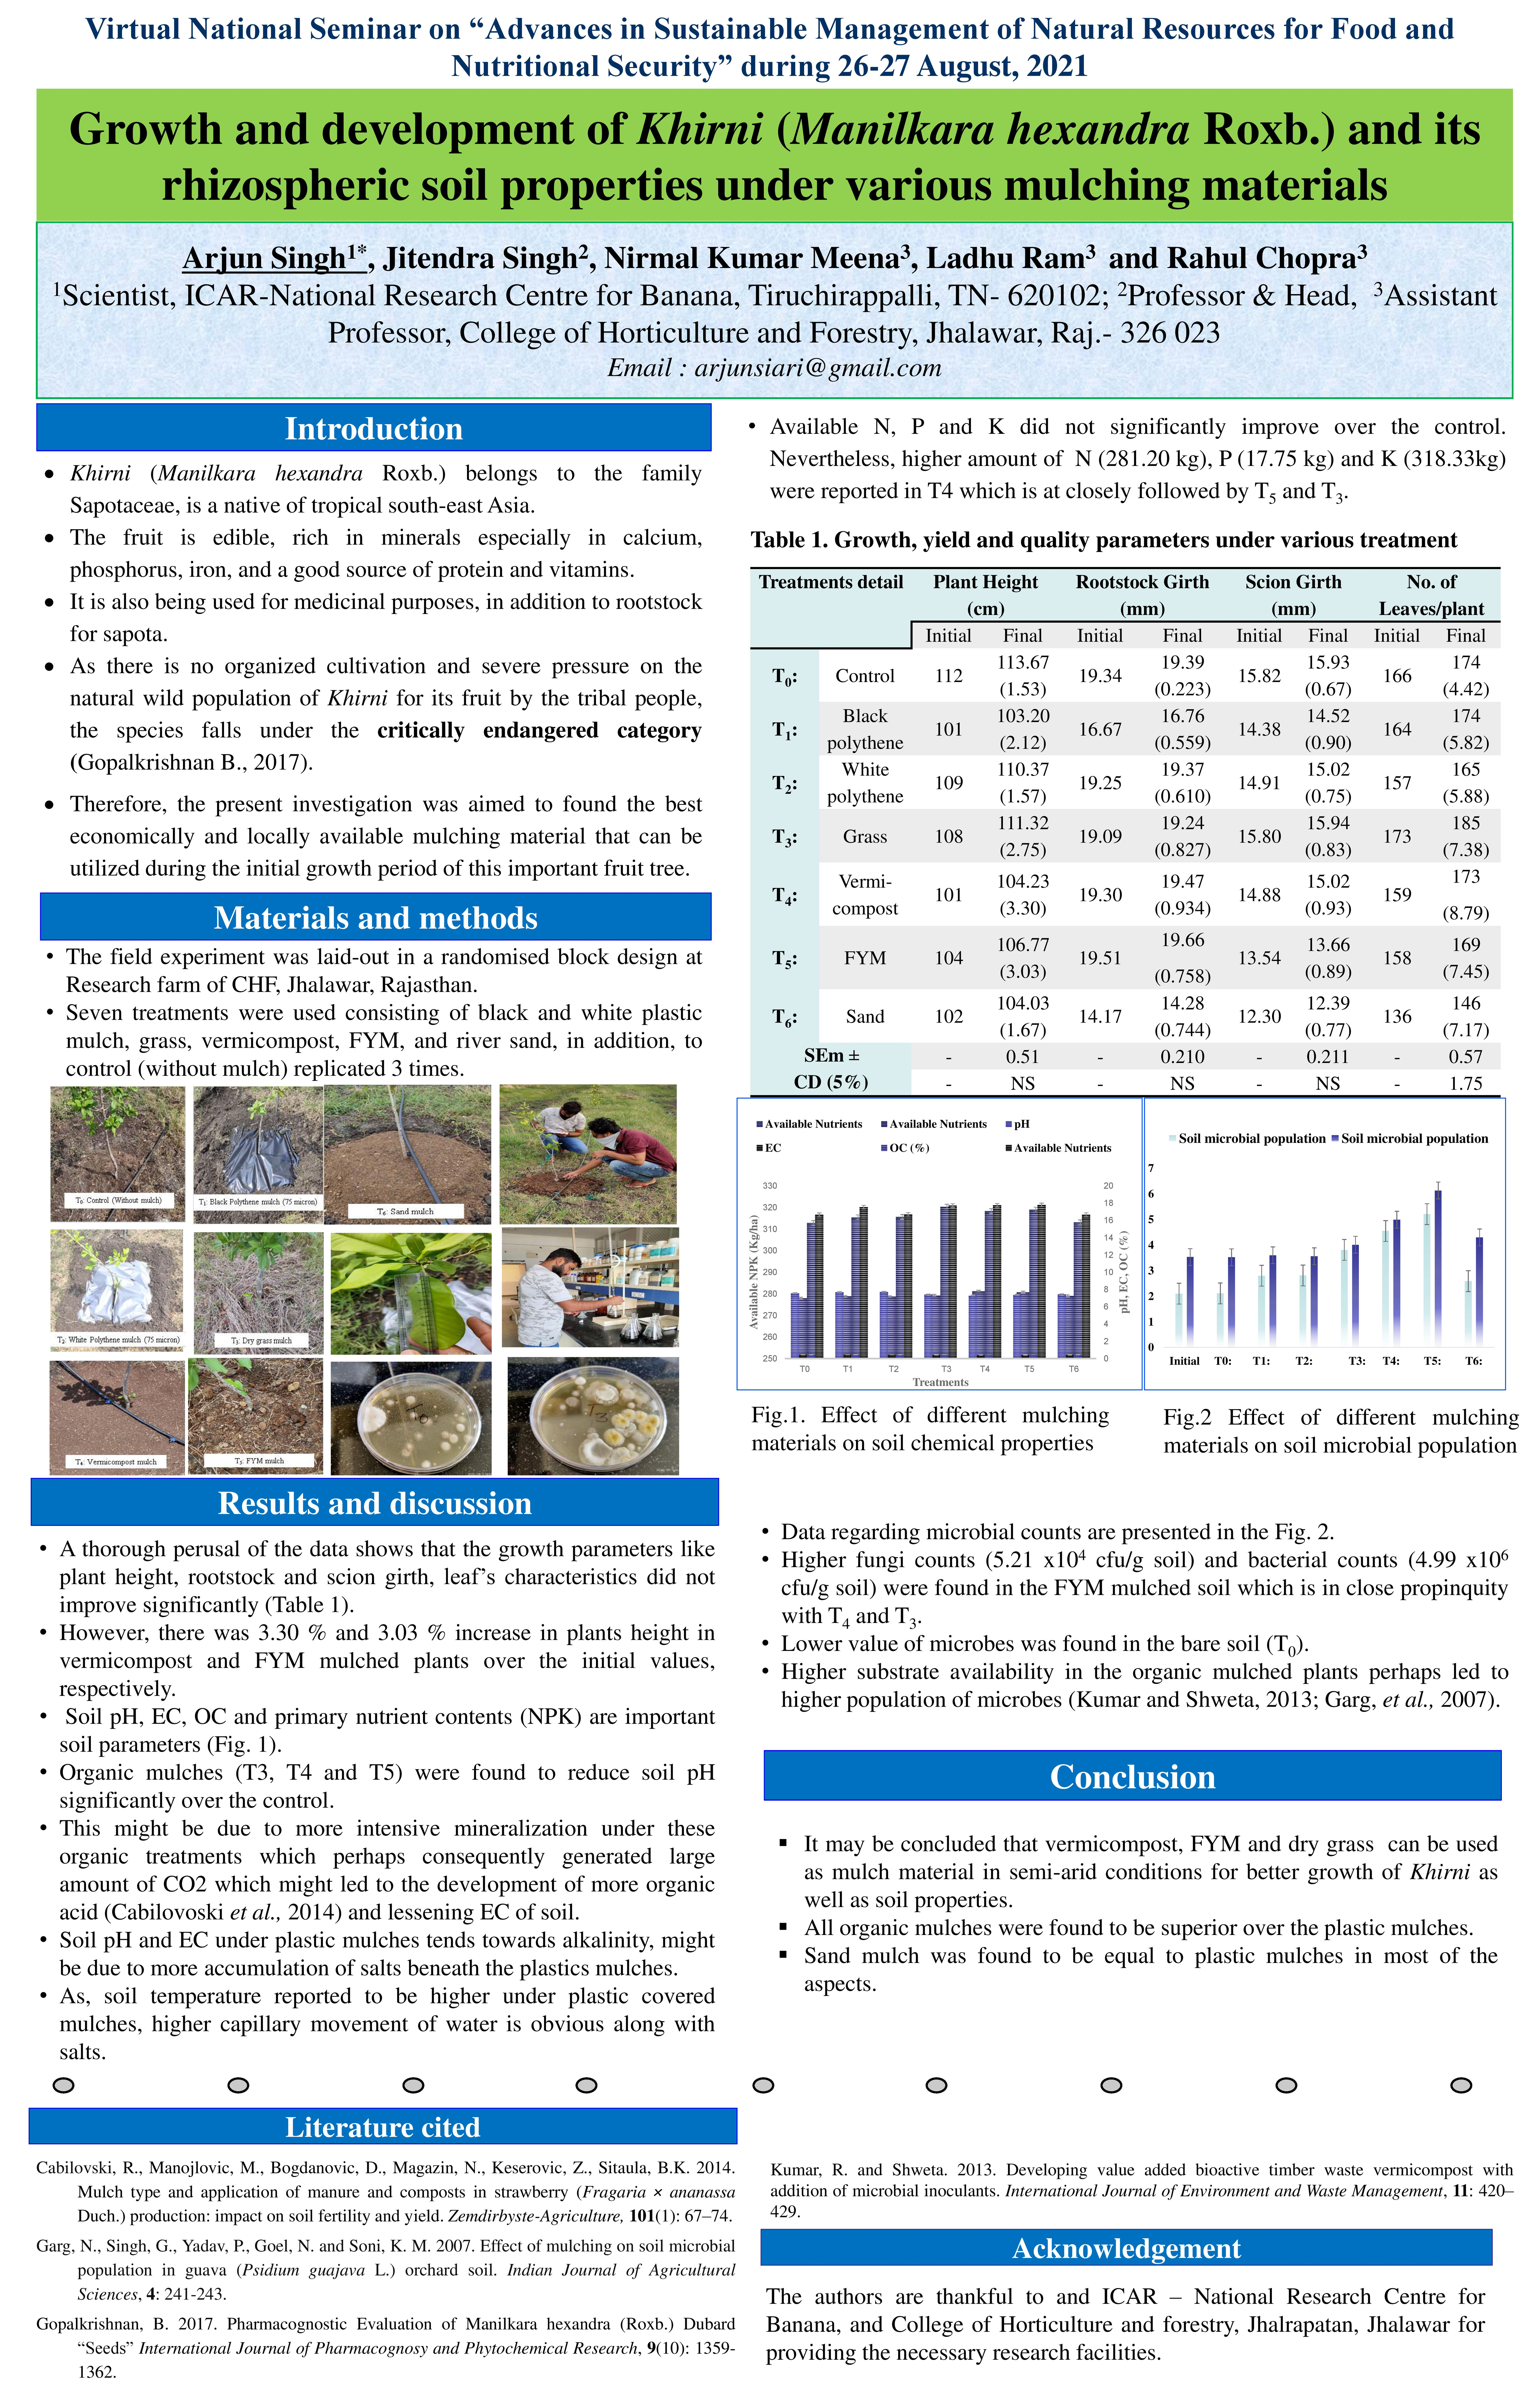 Growth and development of Khirni and its rhizospheric soil properties under various mulching materials